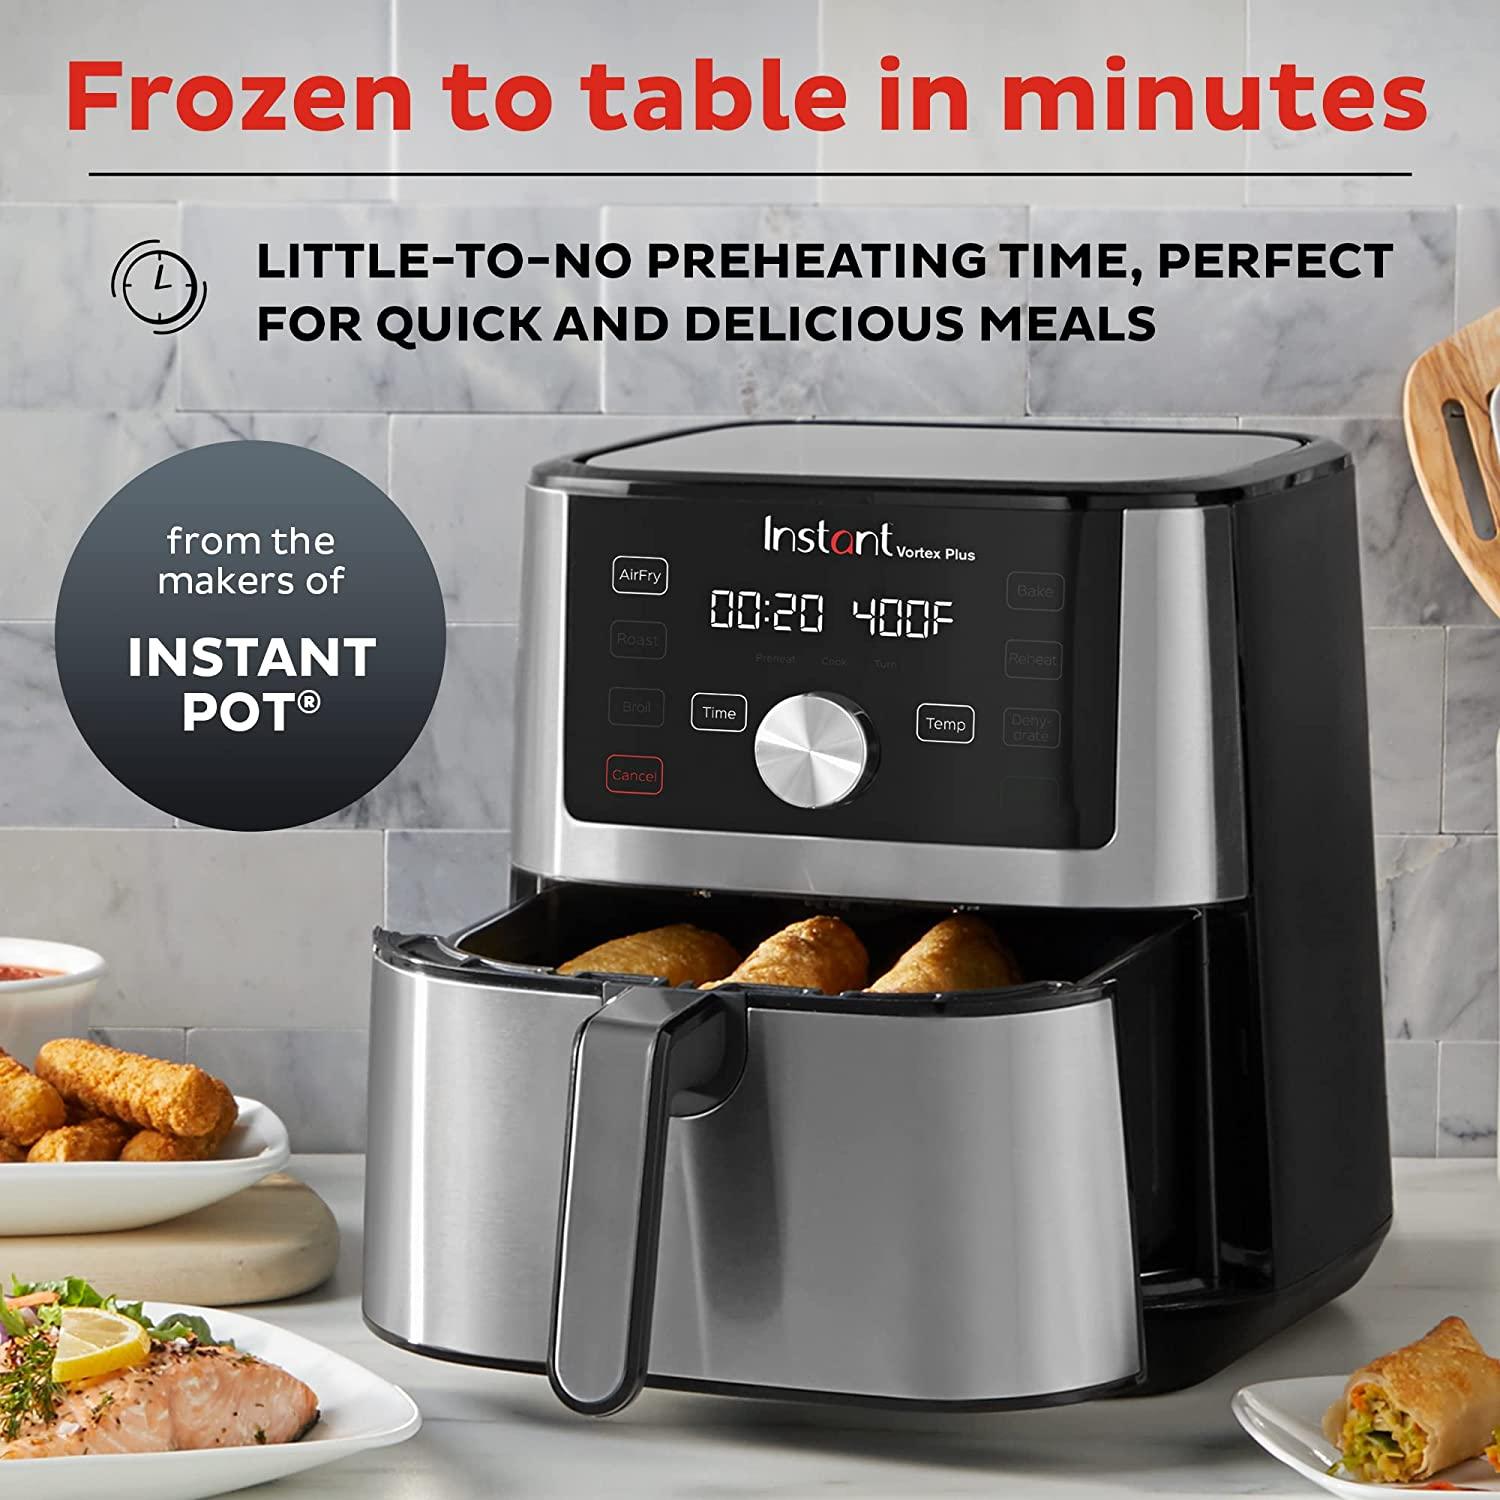 Instant Pot Vortex Pro Air Fryer Oven  Air fryer recipes healthy, Air fryer,  Air fryer recipes